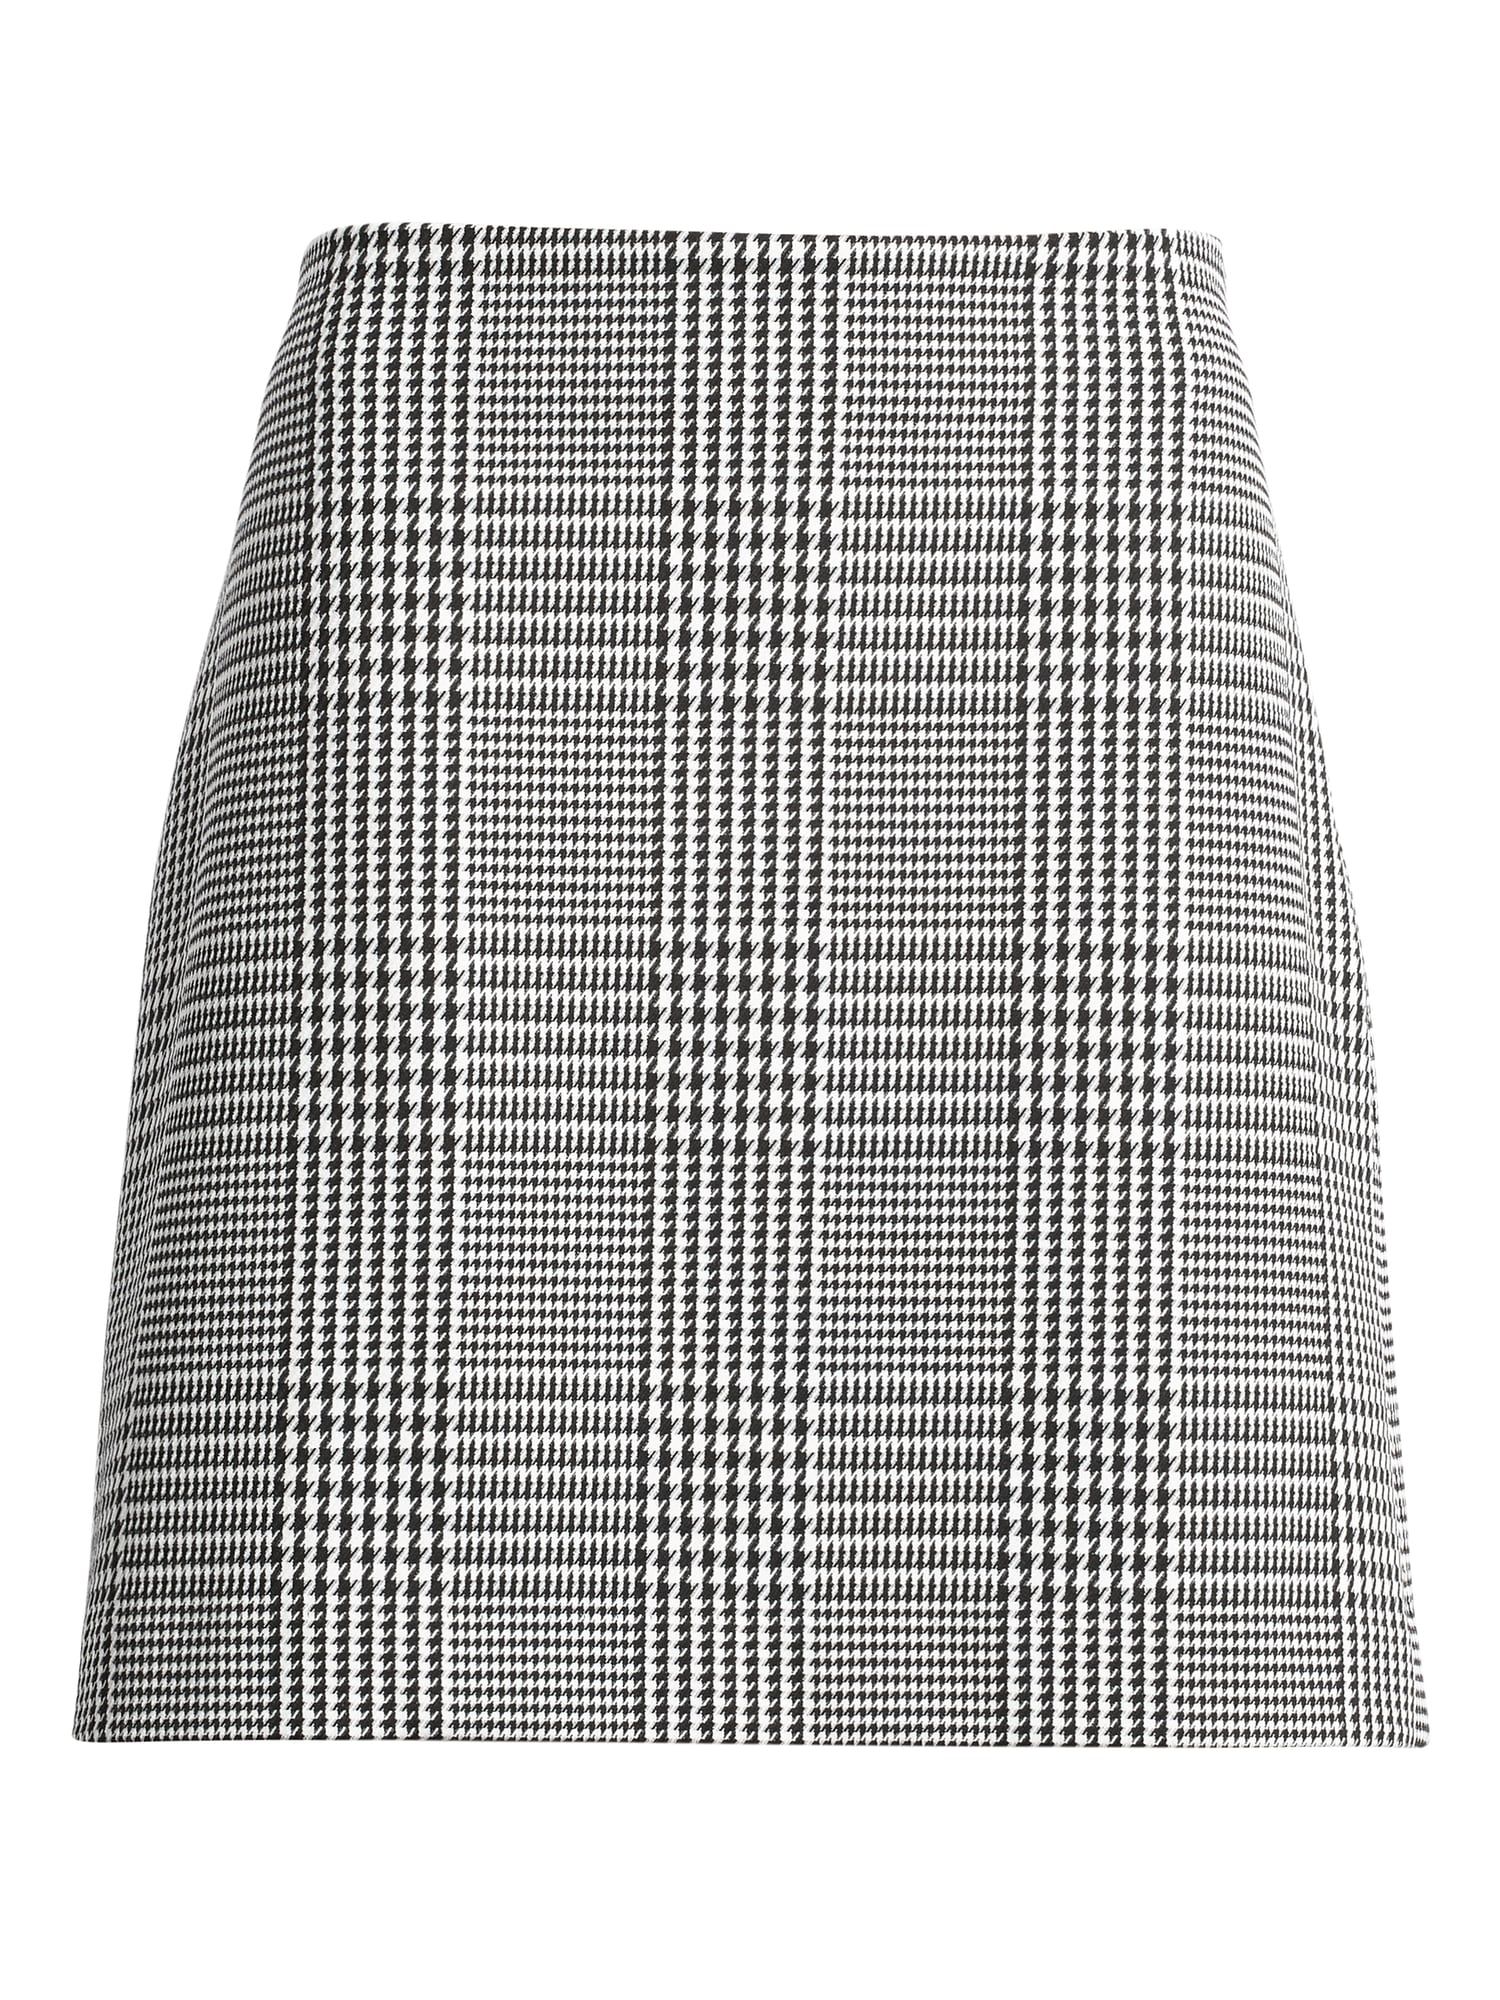 Fashion Skirts Plaid Skirts Moschino Cheap and Chic Plaid Skirt light grey-black spot pattern business style 